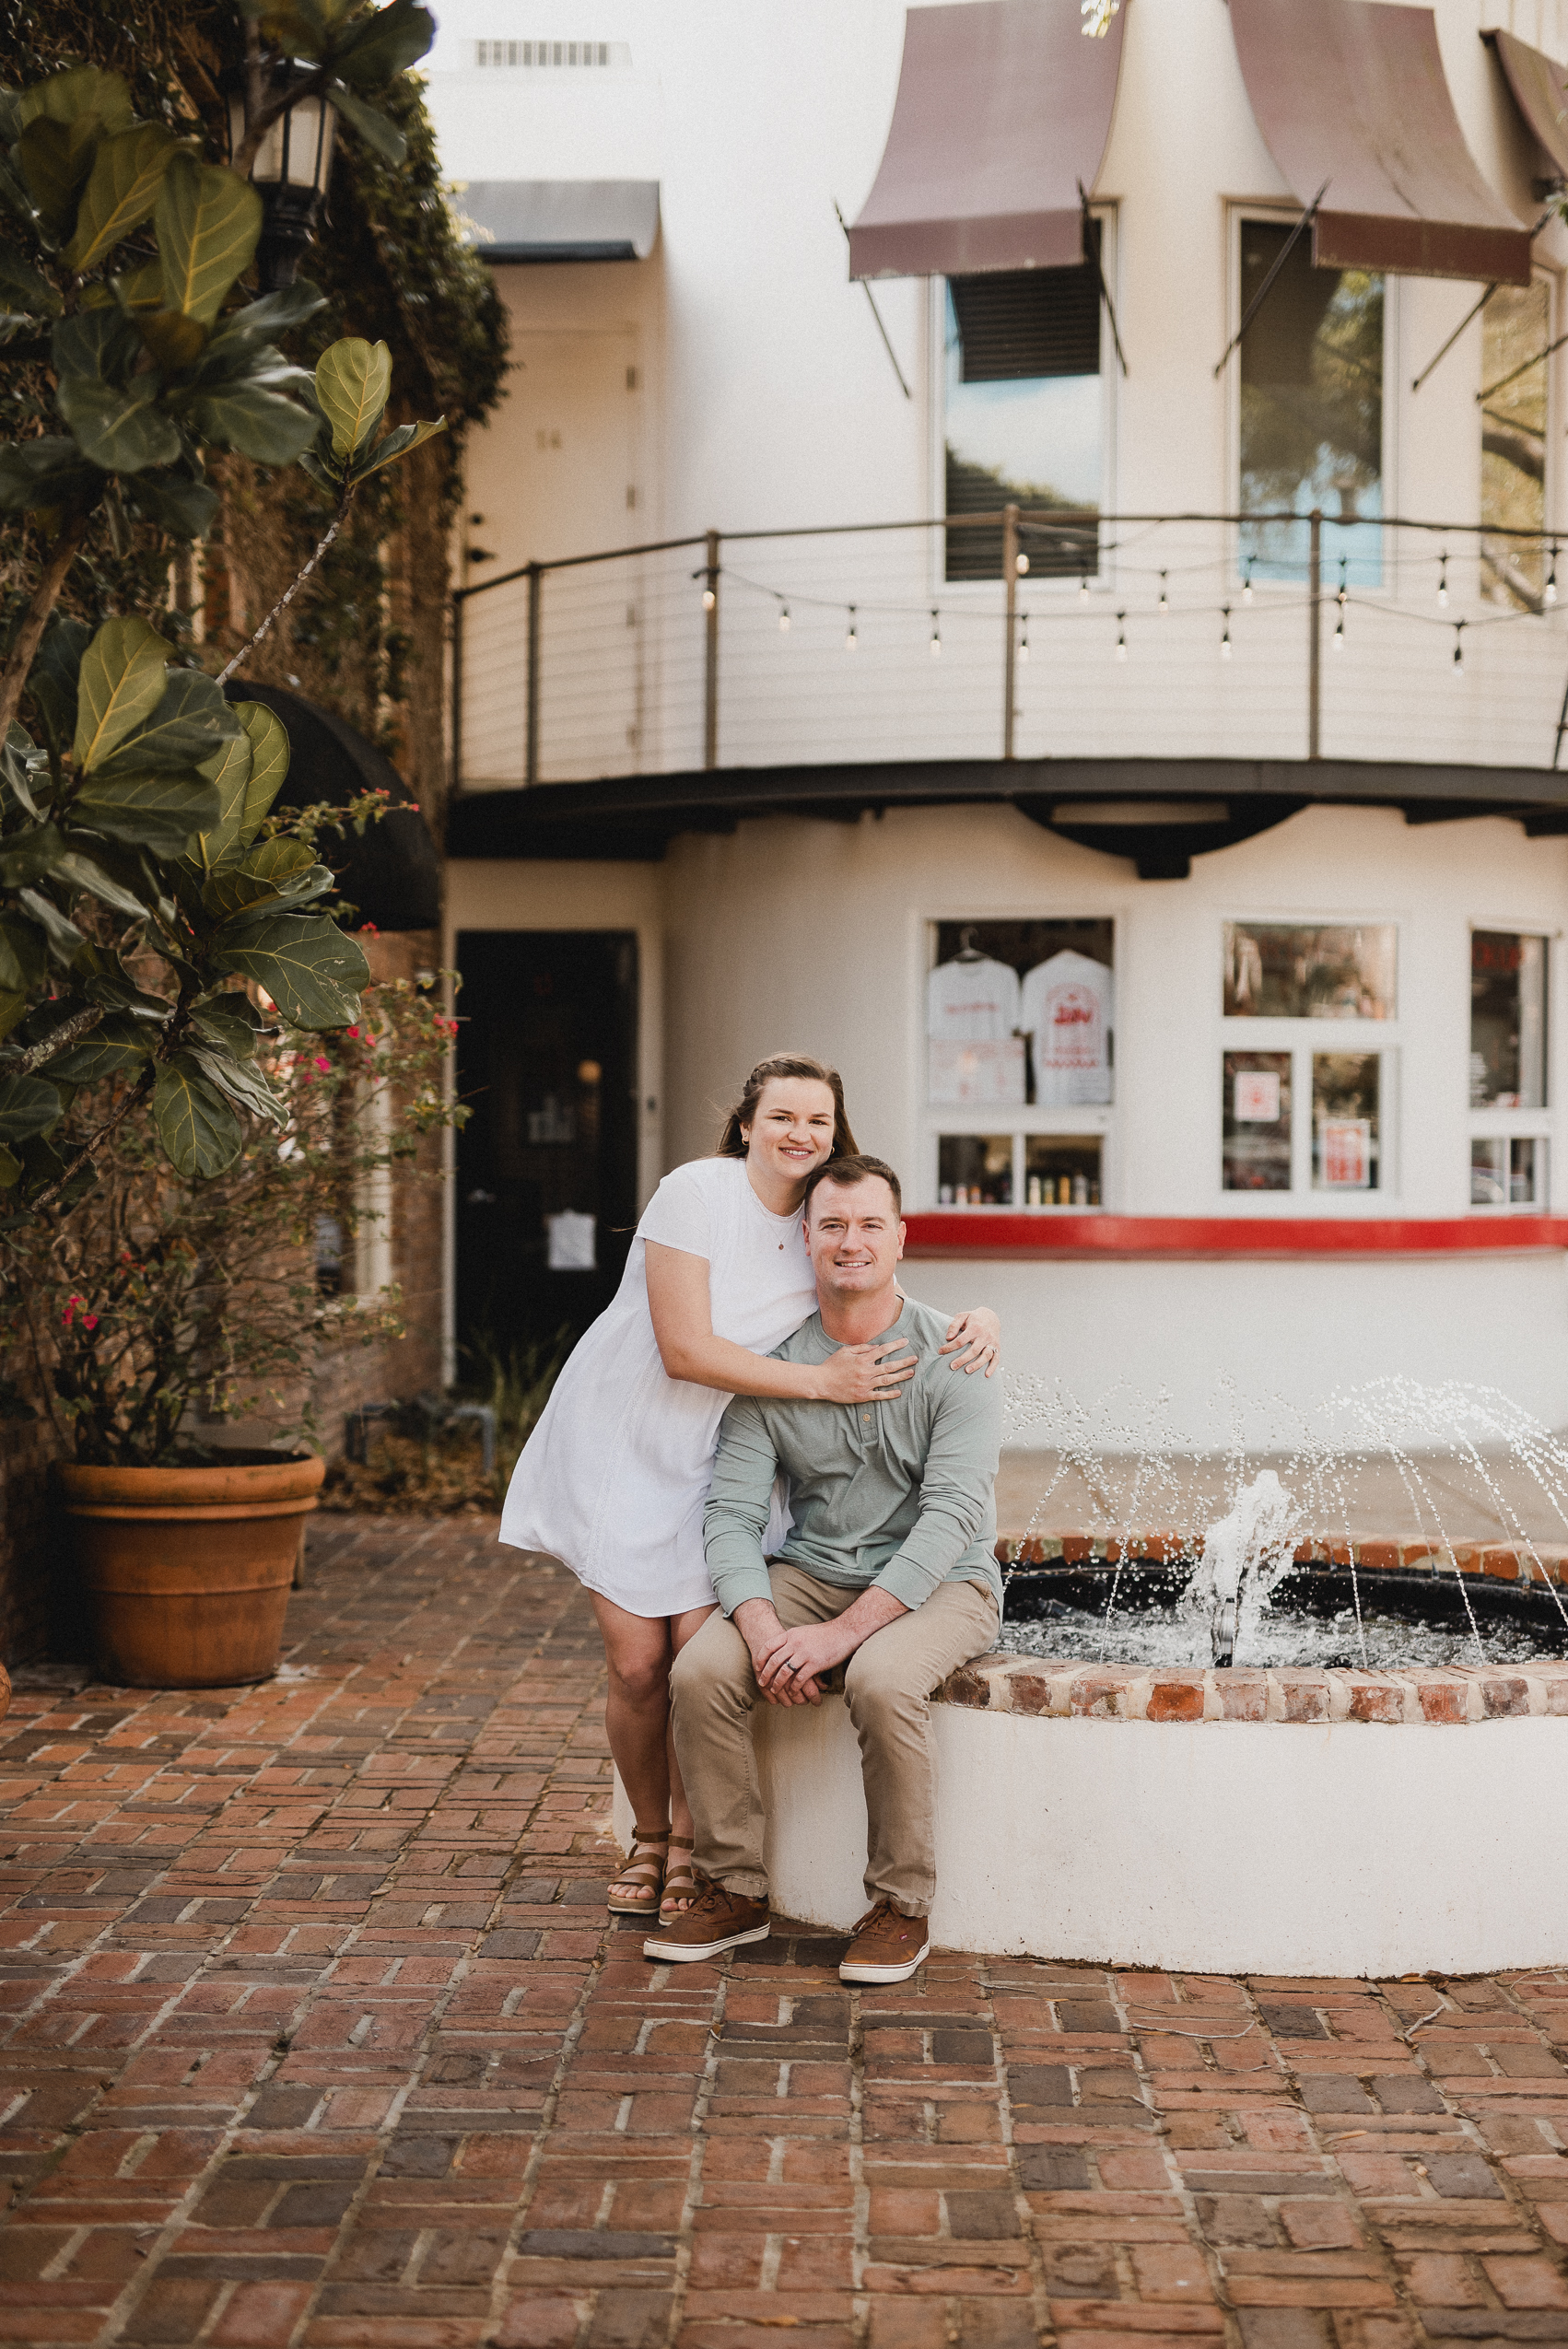 Local Orlando Florida Couples Enagagement Destination Elopement Intimate Wedding Photographer